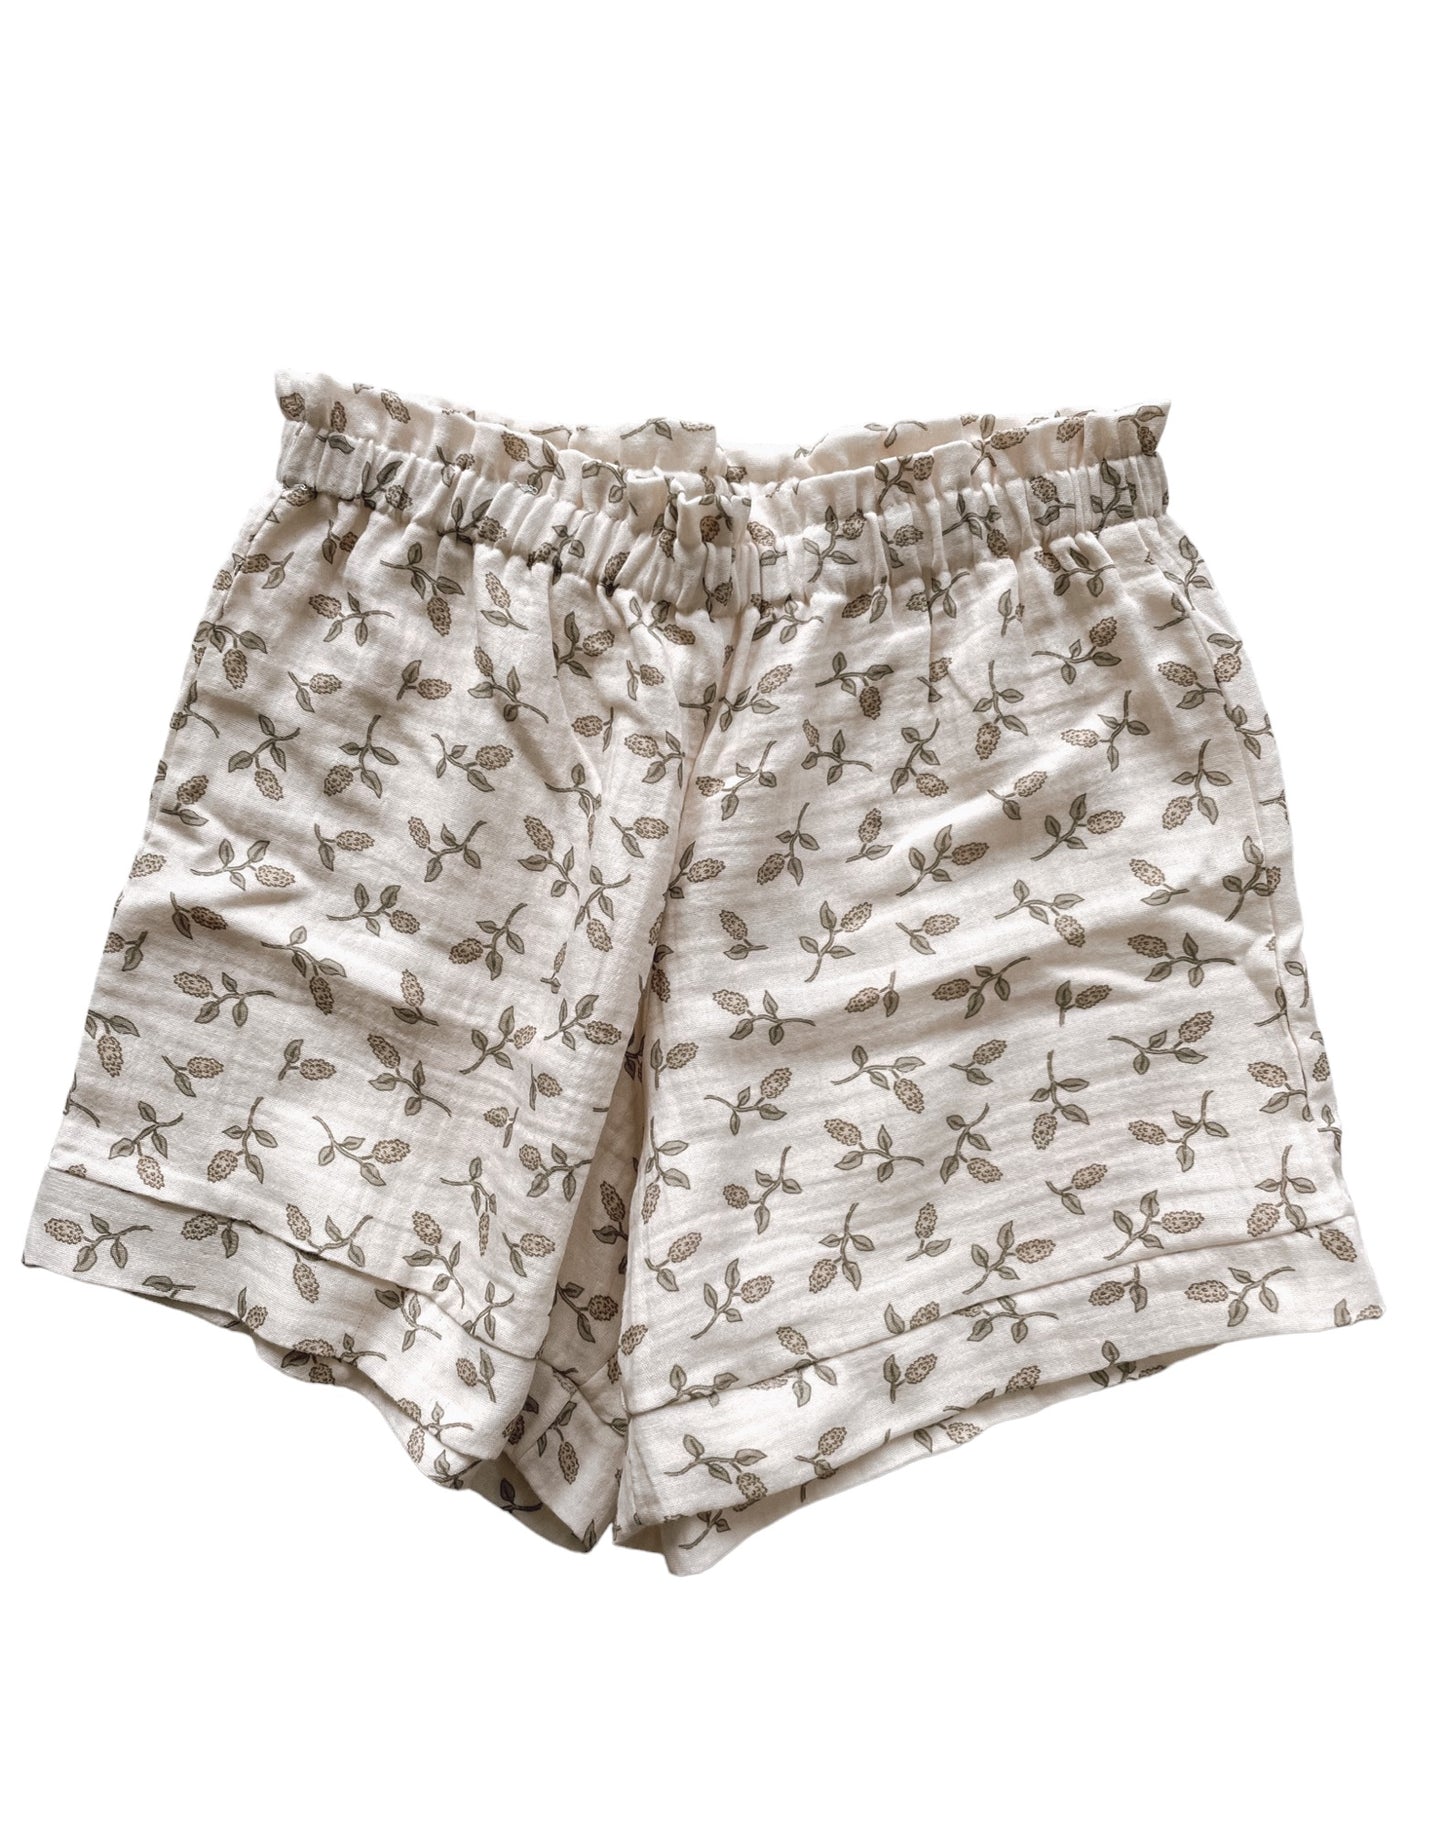 Muslin ruffle shorts / Simple floral